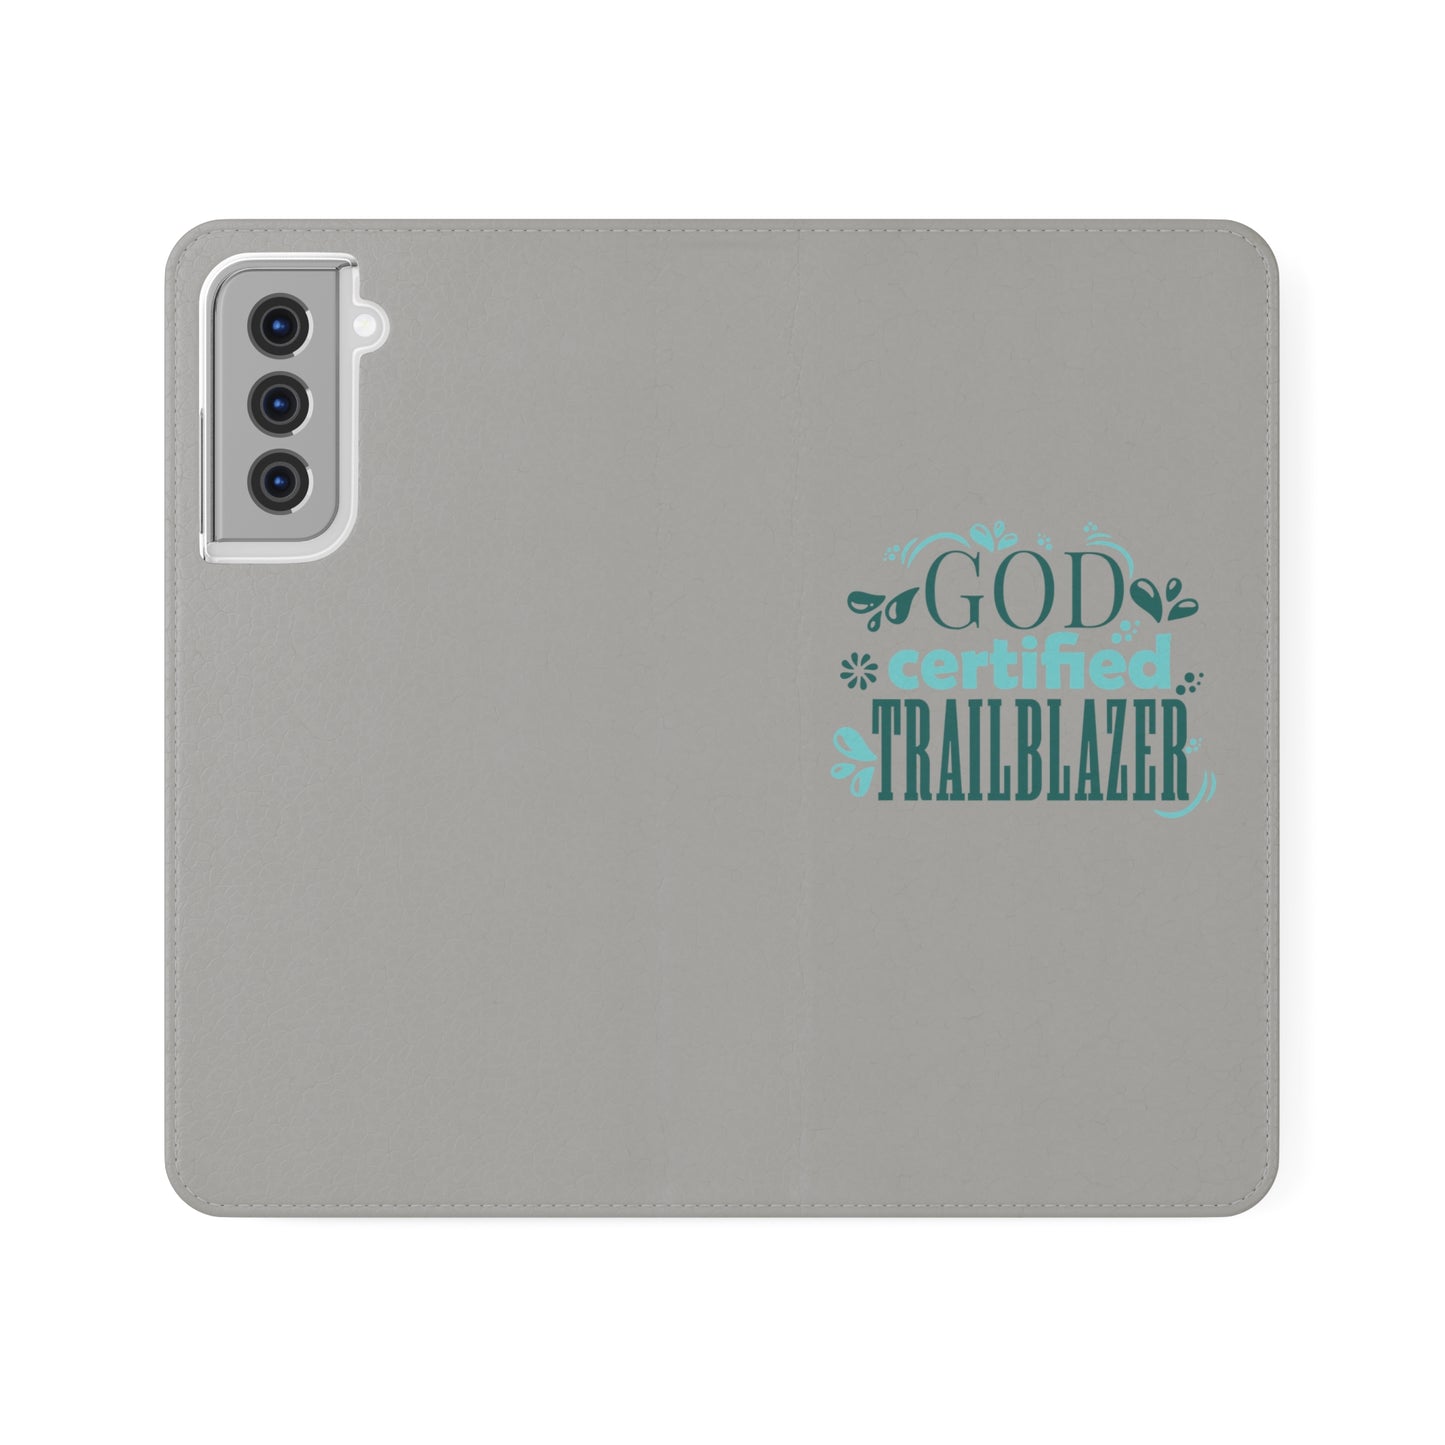 God Certified Trailblazer Phone Flip Cases